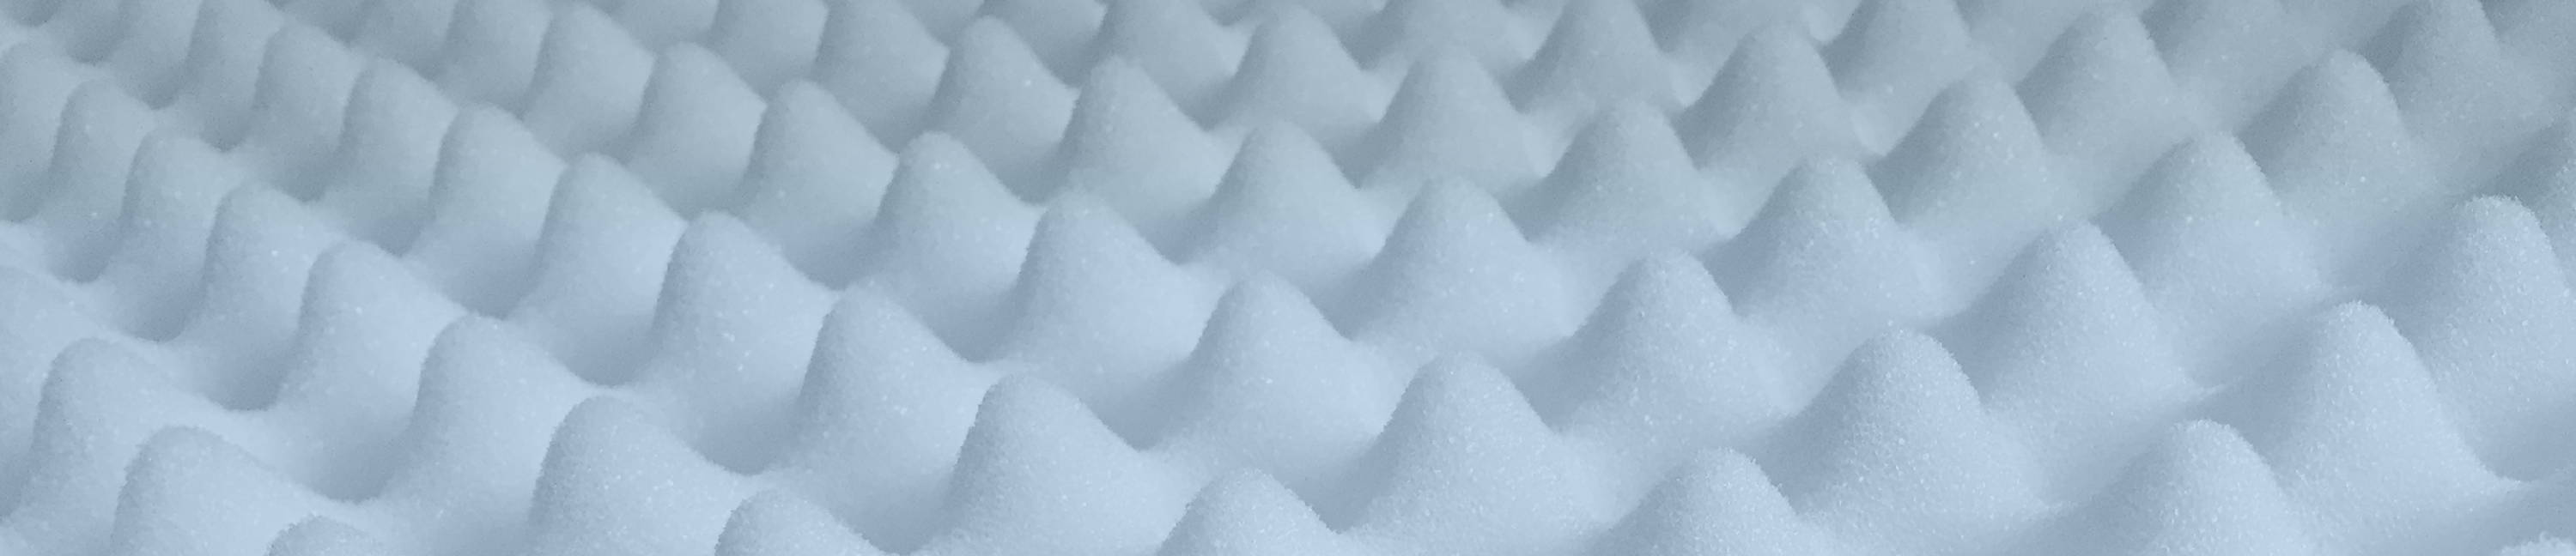 What Makes a Great Memory Foam Mattres. header image up close memory foam